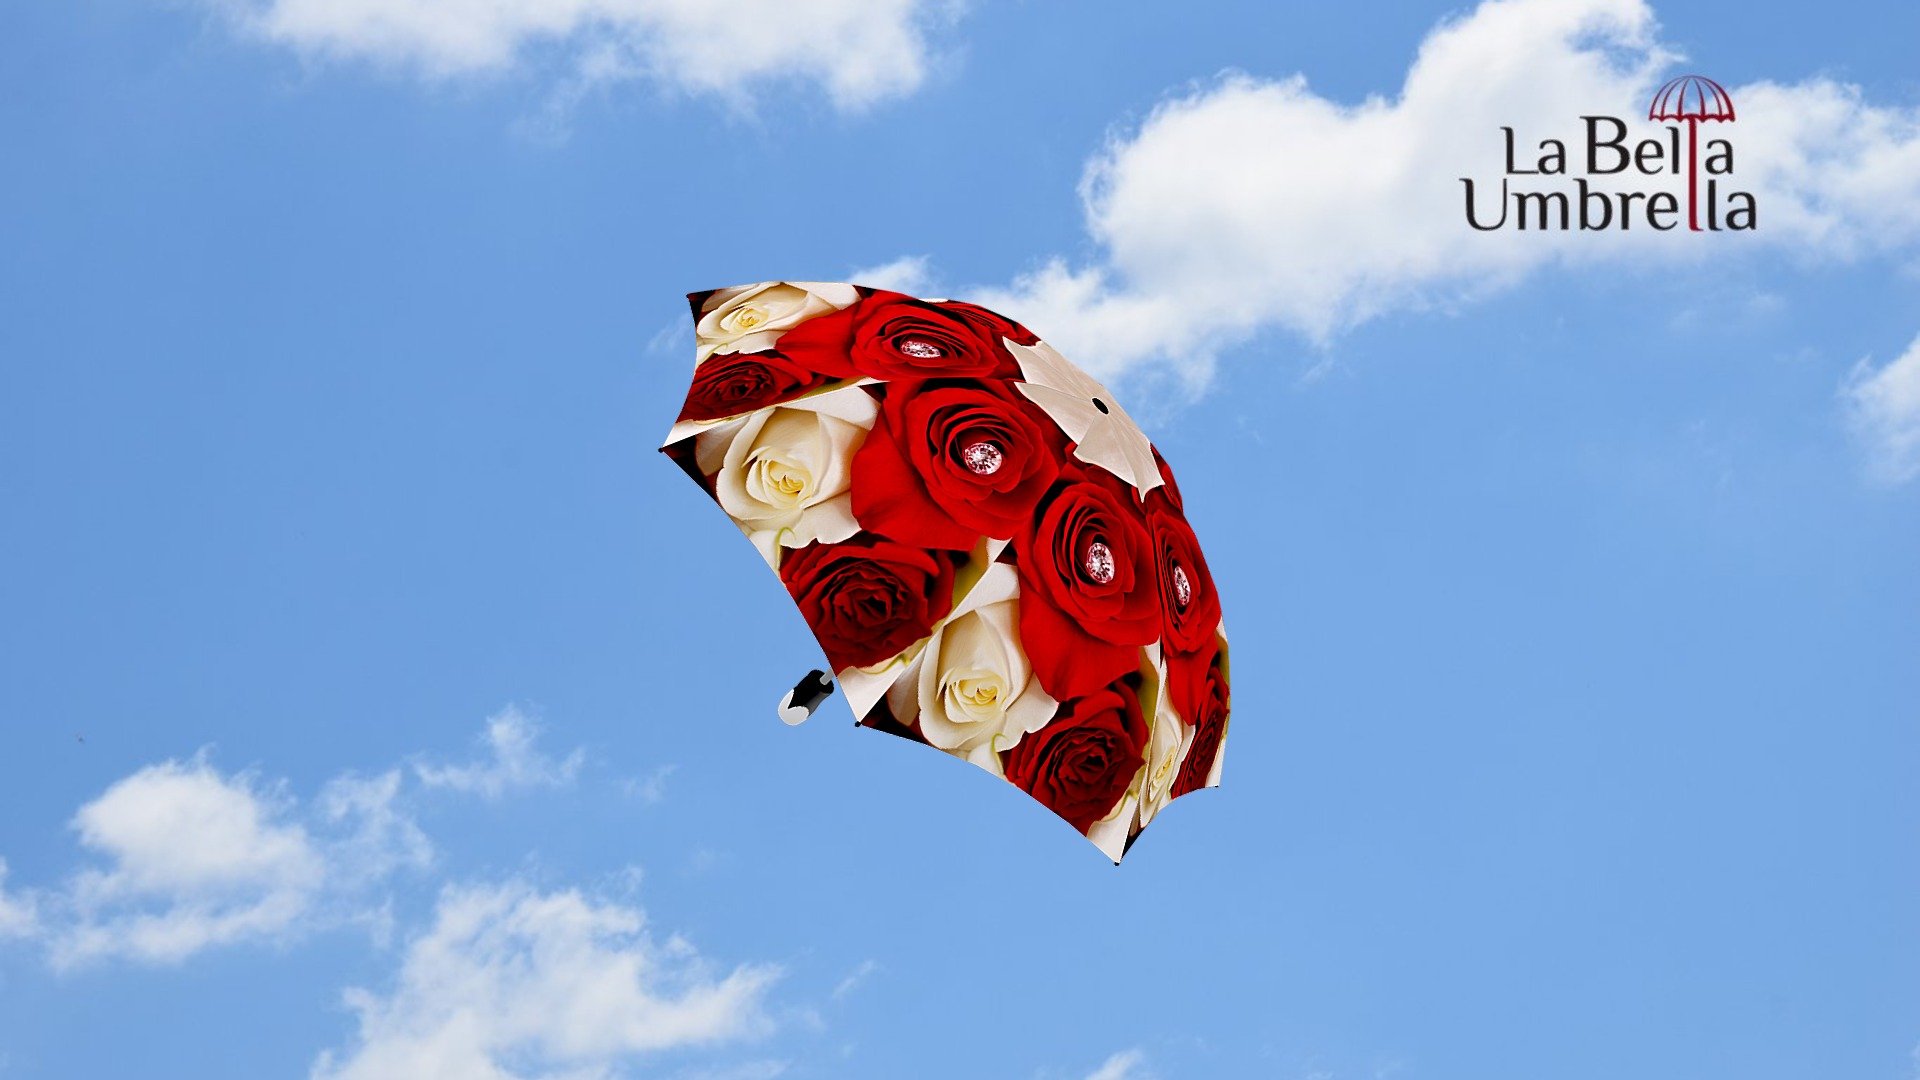 White Roses Umbrella - High Quality, Beautiful Full Canopy Design